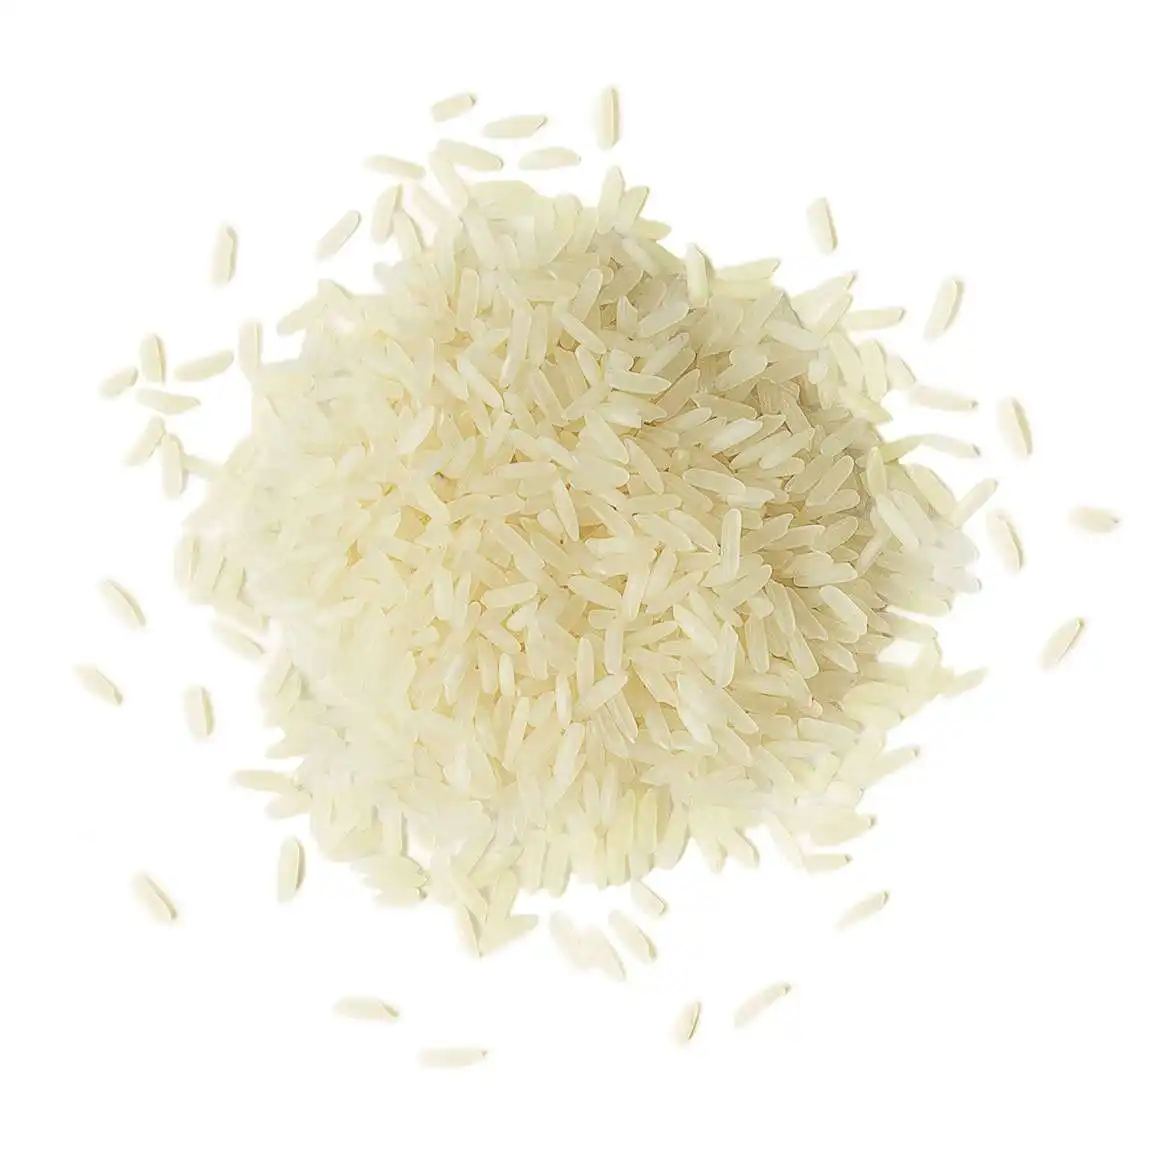 Paquete de etiqueta privada de arroz integral blanco crudo de grano largo de Tailandia personalizado